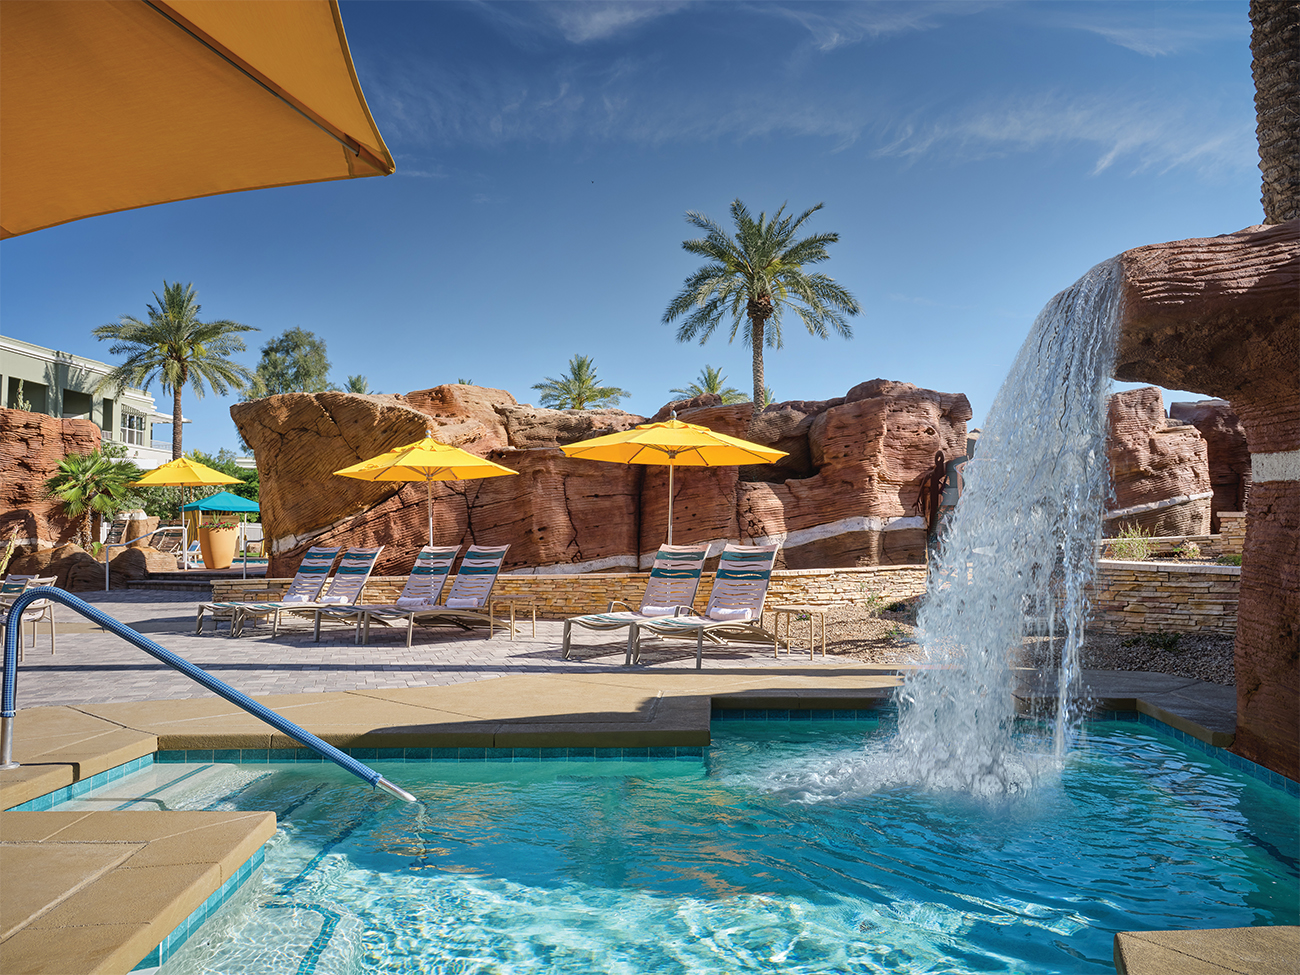 Marriott's Canyon Villas Whirlpool Spa. Marriott's Canyon Villas is located in Phoenix, Arizona United States.